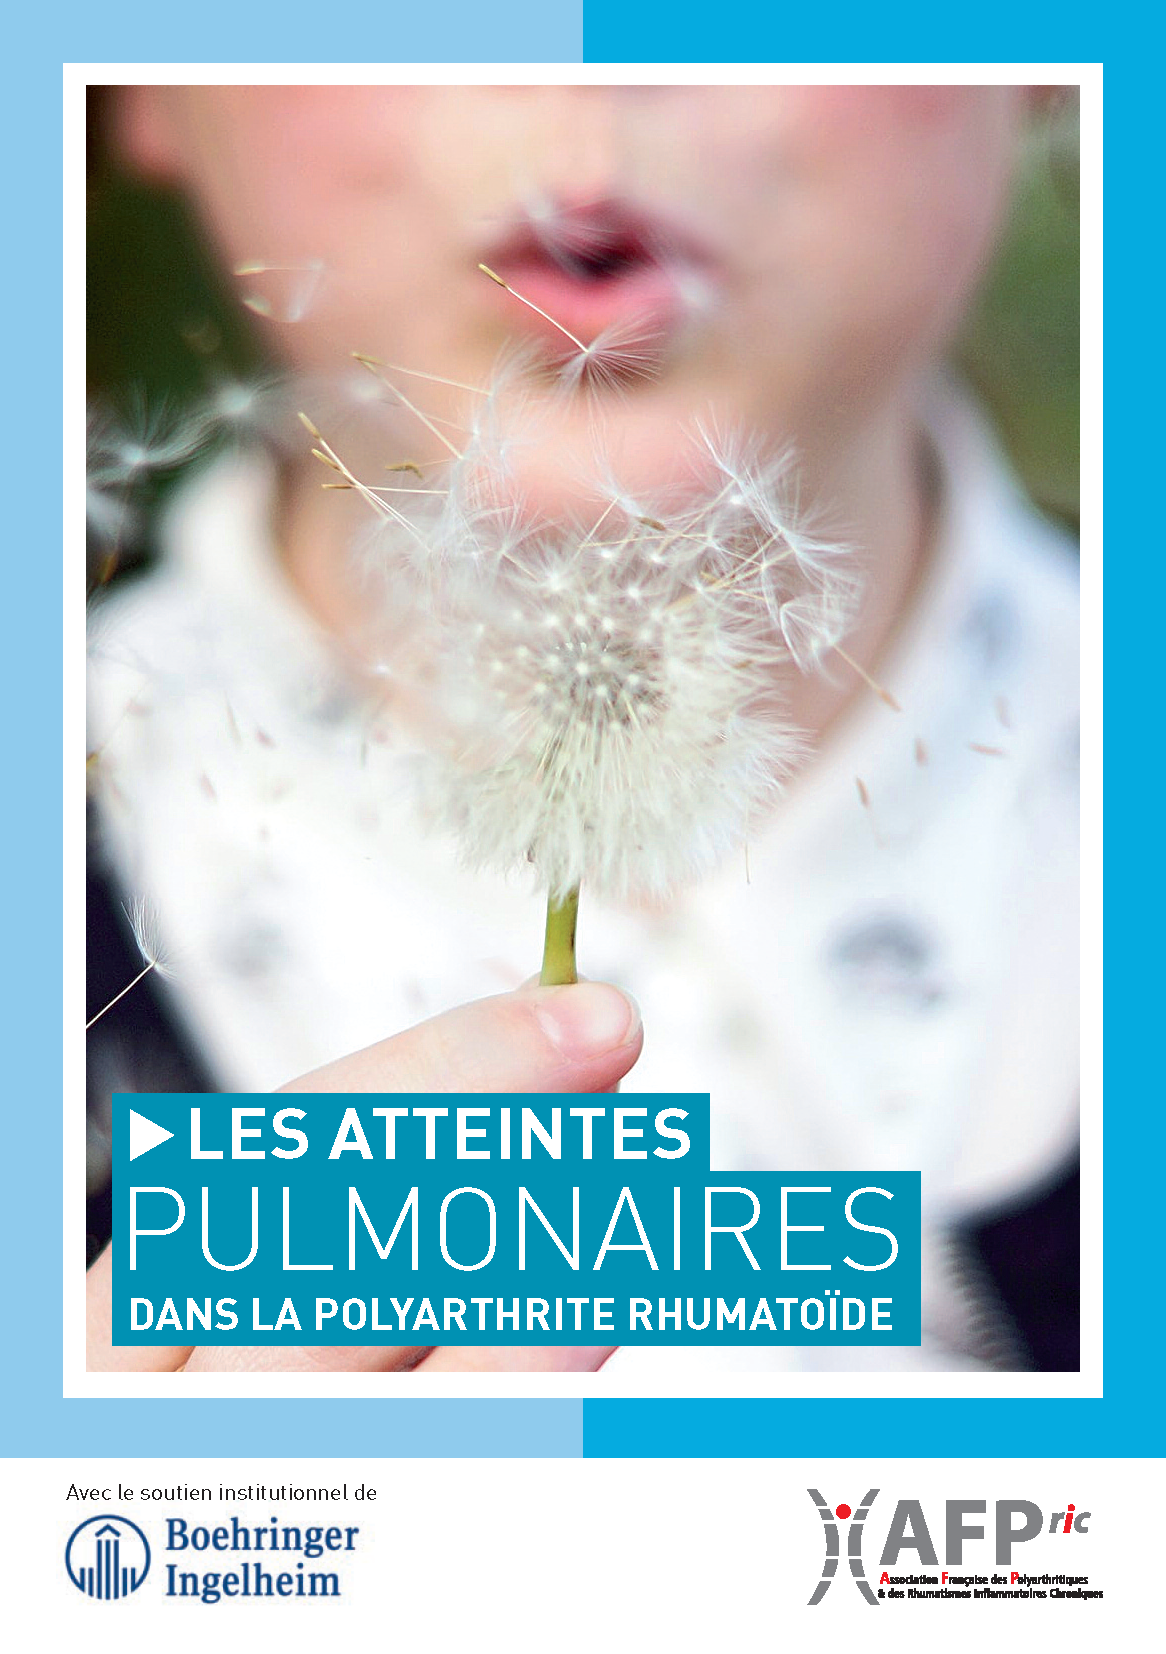 Page 1 de la brochure "Les atteintes pulmonaires dans la polyarthrite rhumatoide".